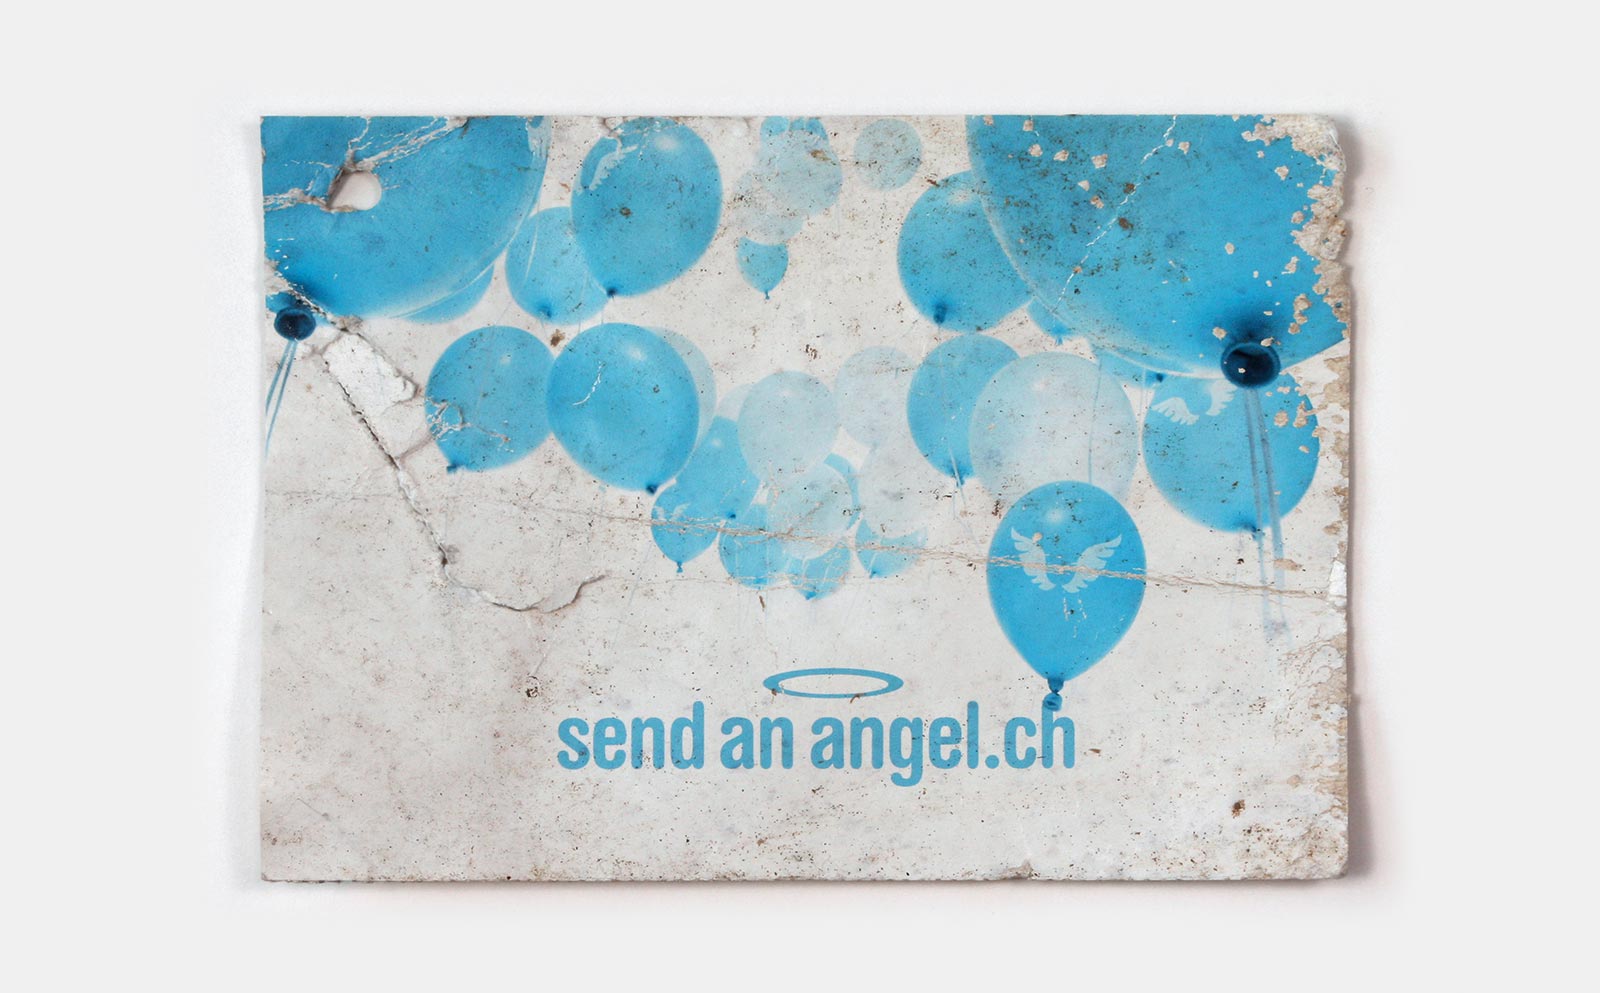 Send an angel – Kommunikationskonzept Corporate Design Gestaltung Logo Kampagne